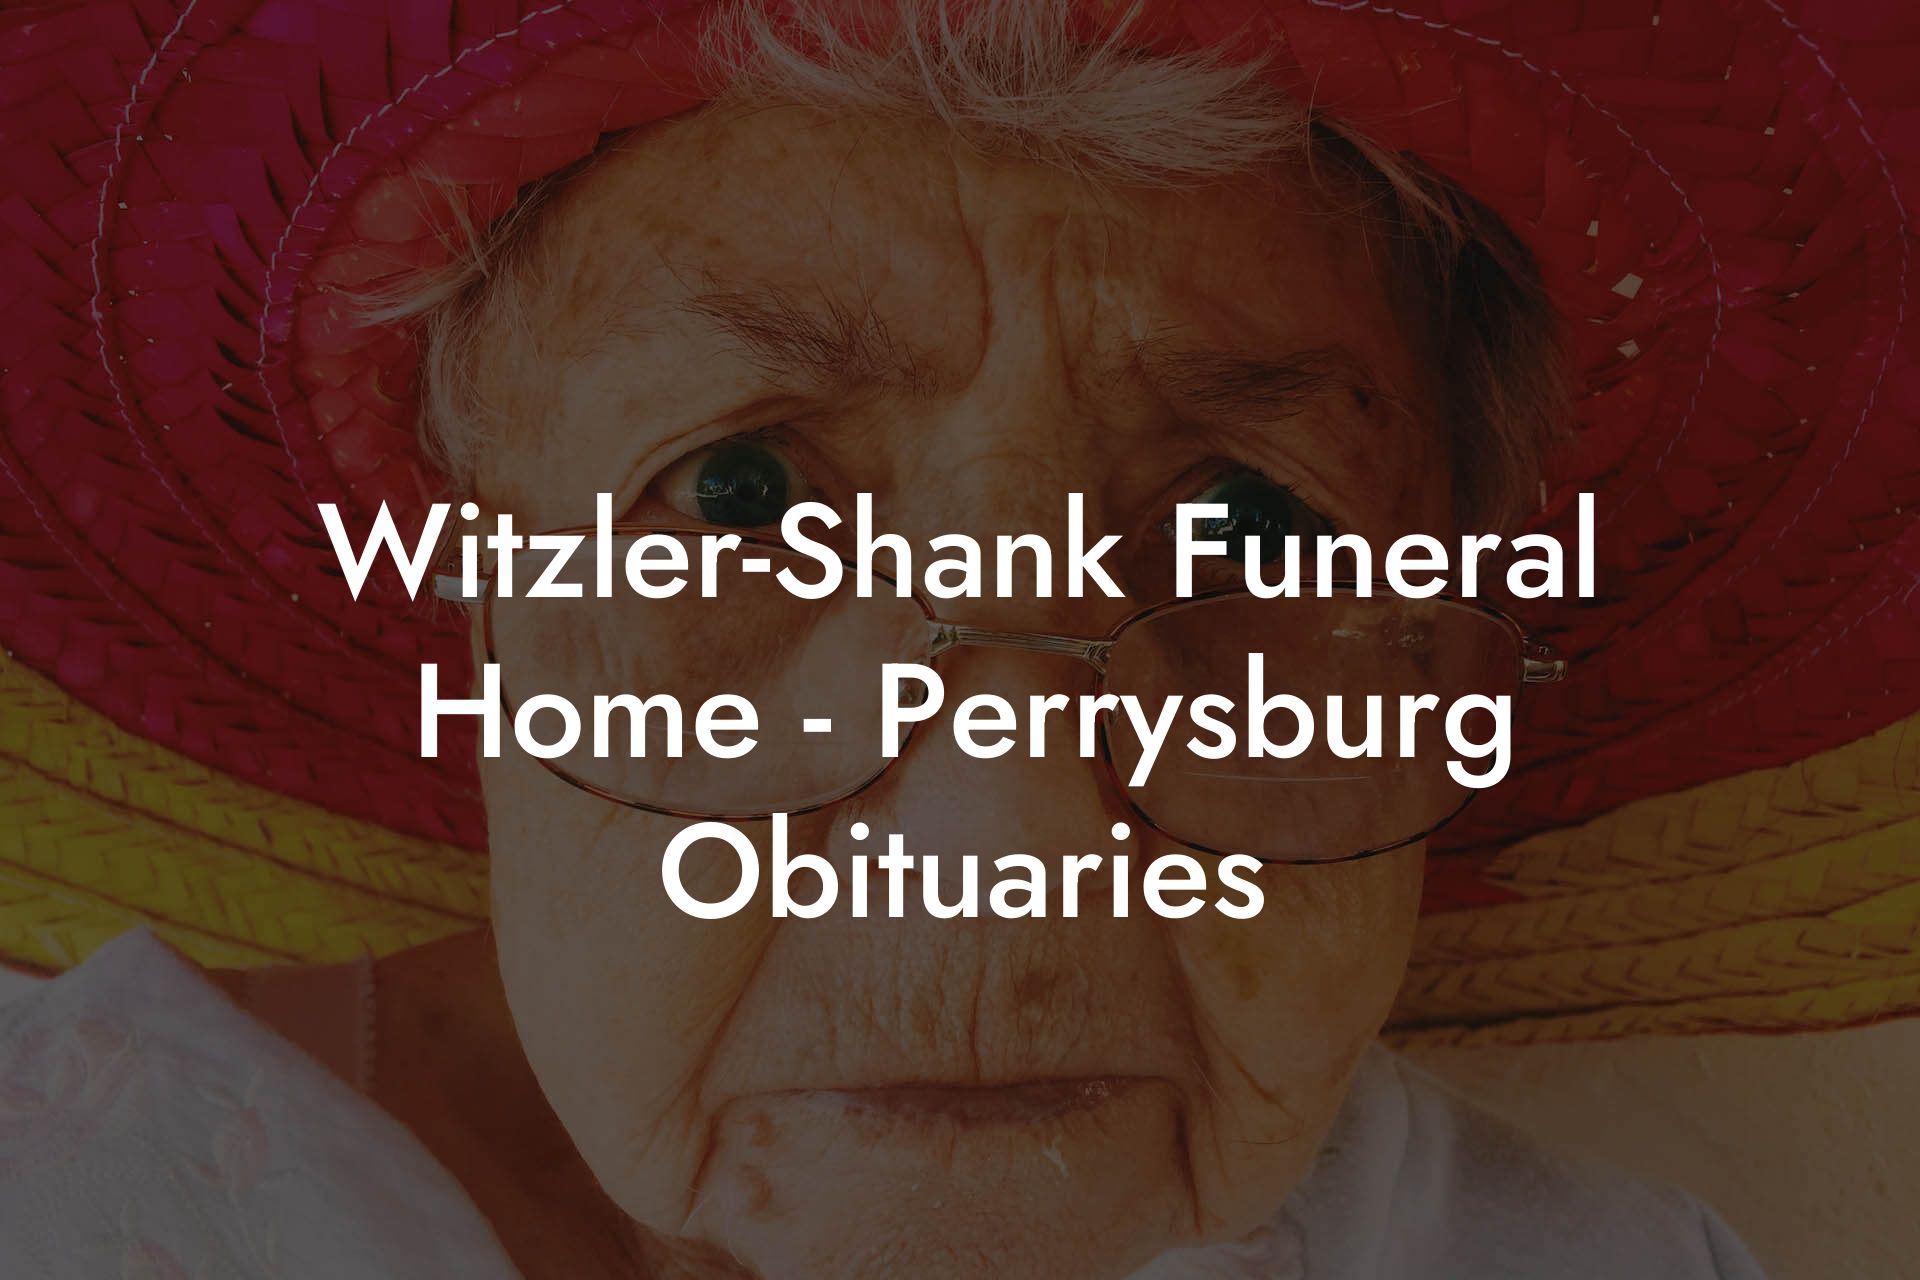 Witzler-Shank Funeral Home - Perrysburg Obituaries